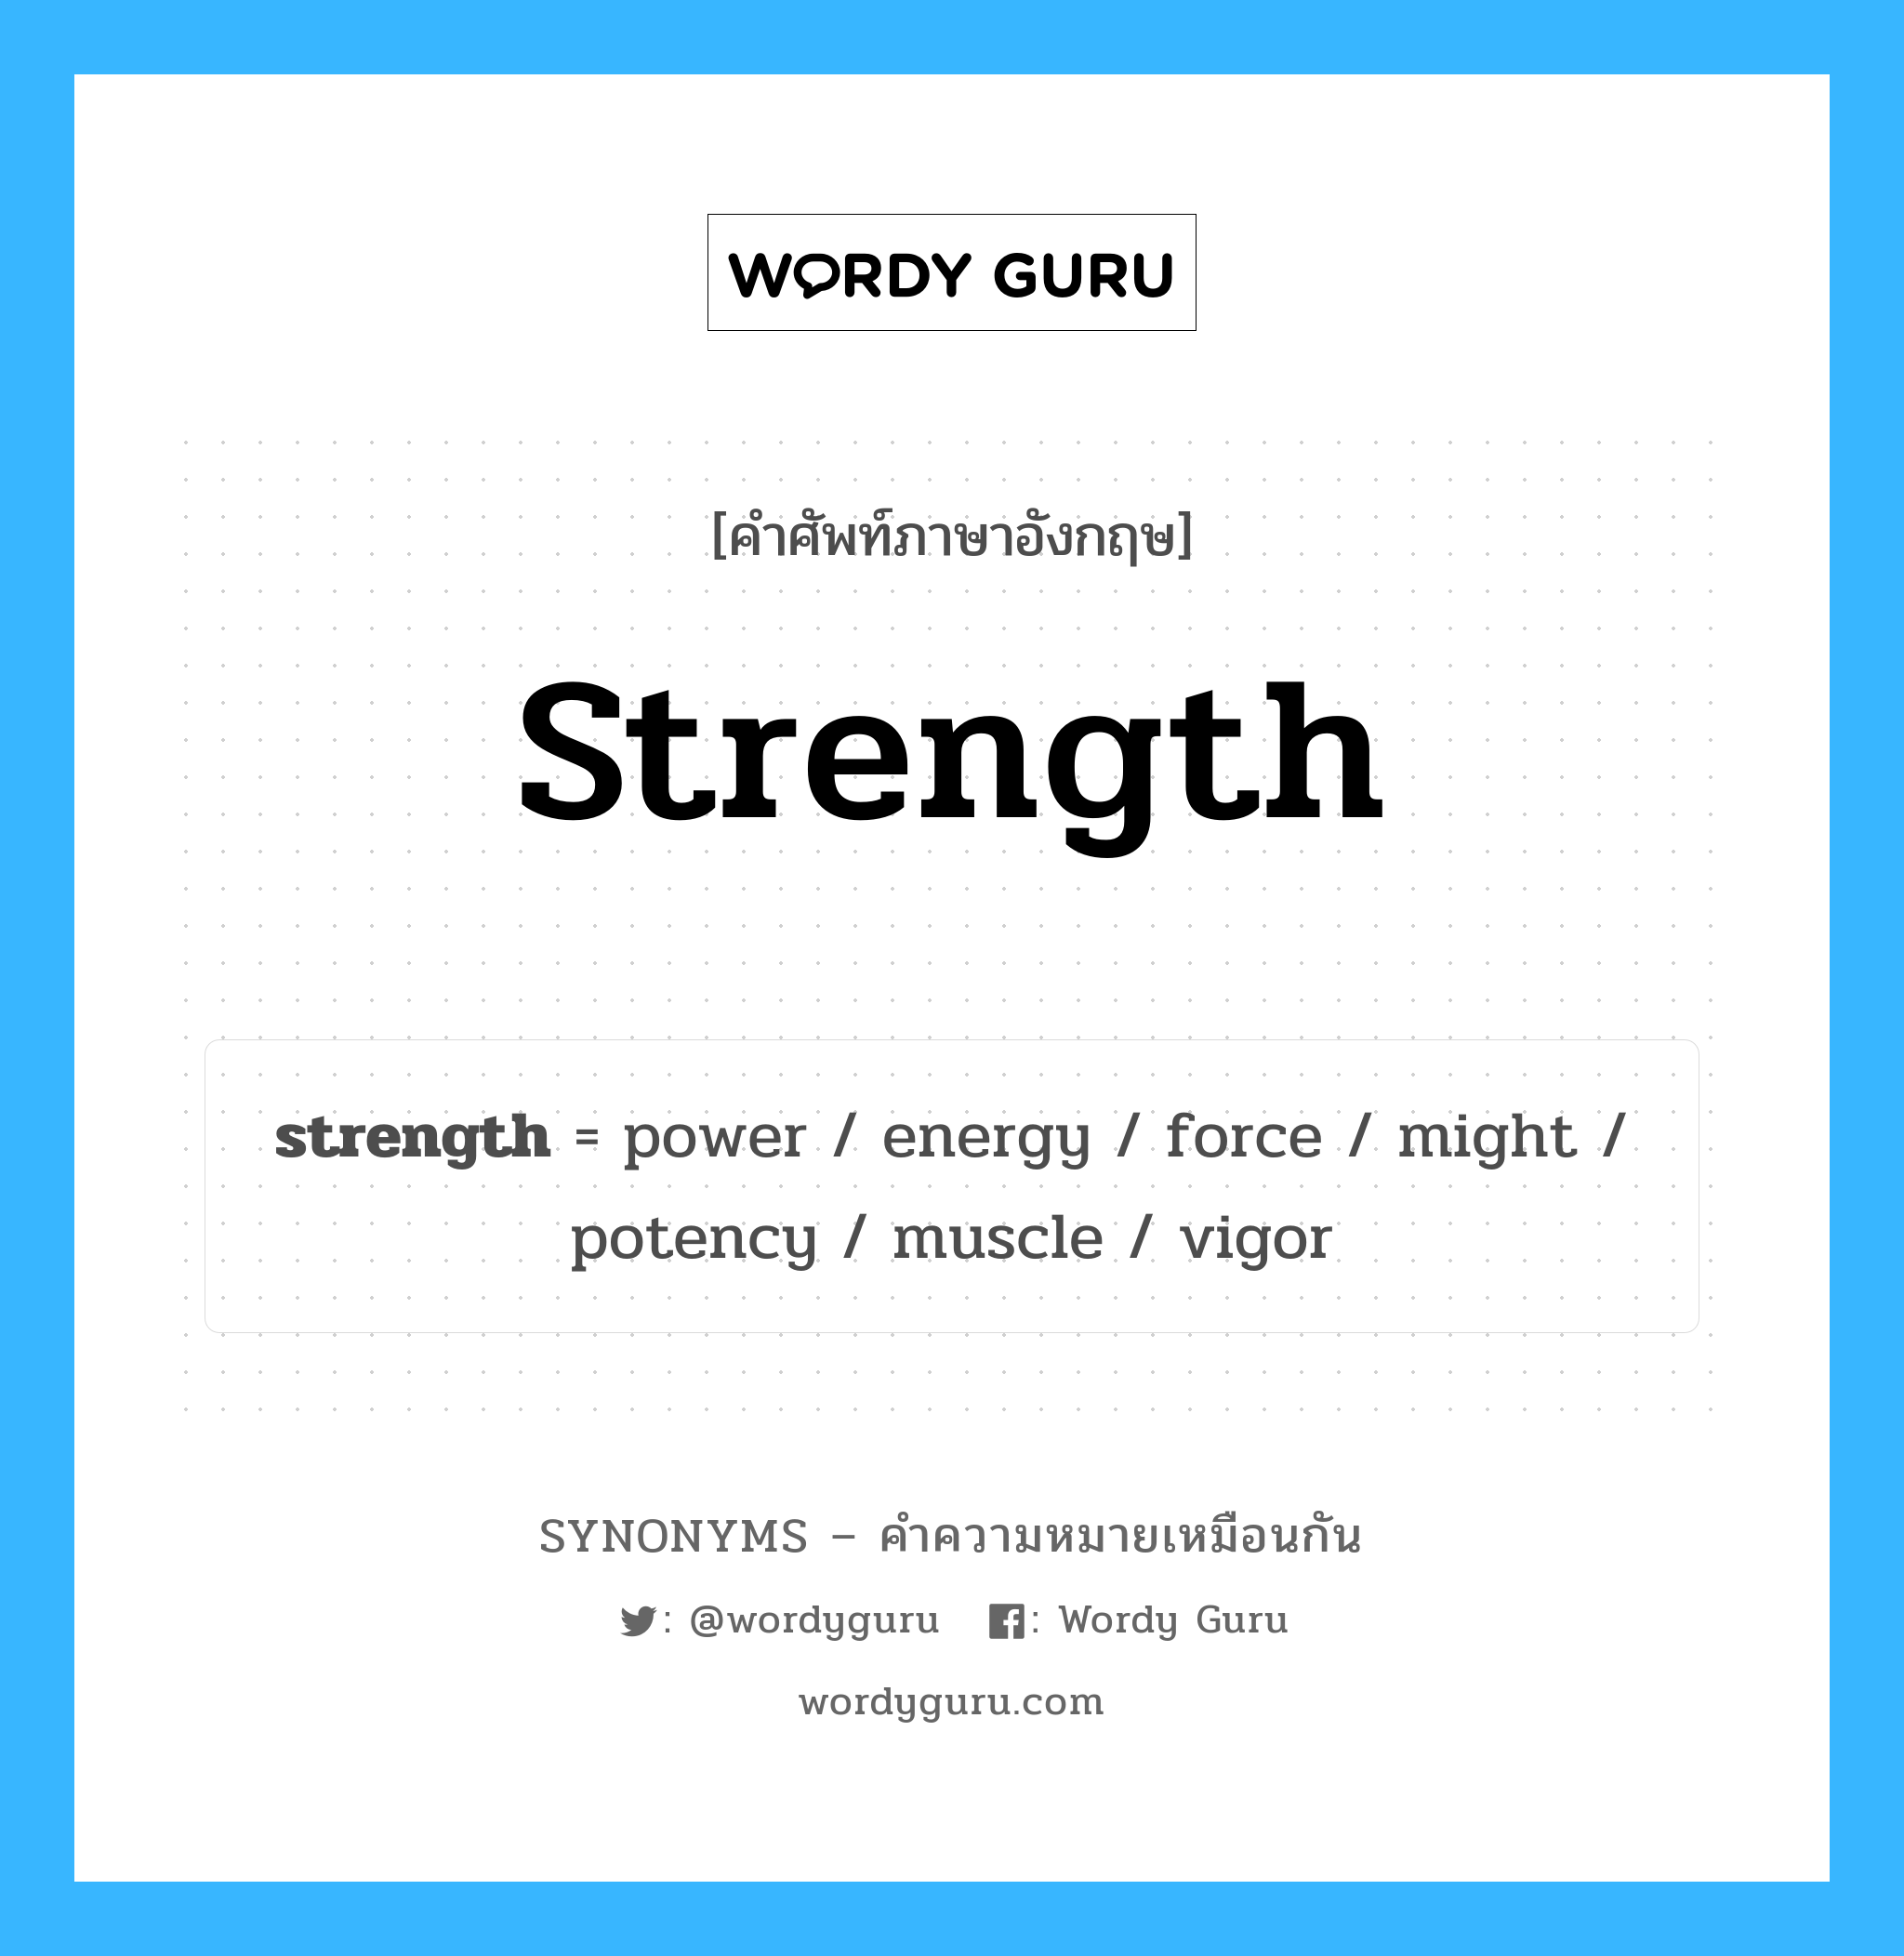 muscle เป็นหนึ่งใน strength และมีคำอื่น ๆ อีกดังนี้, คำศัพท์ภาษาอังกฤษ muscle ความหมายคล้ายกันกับ strength แปลว่า กล้ามเนื้อ หมวด strength